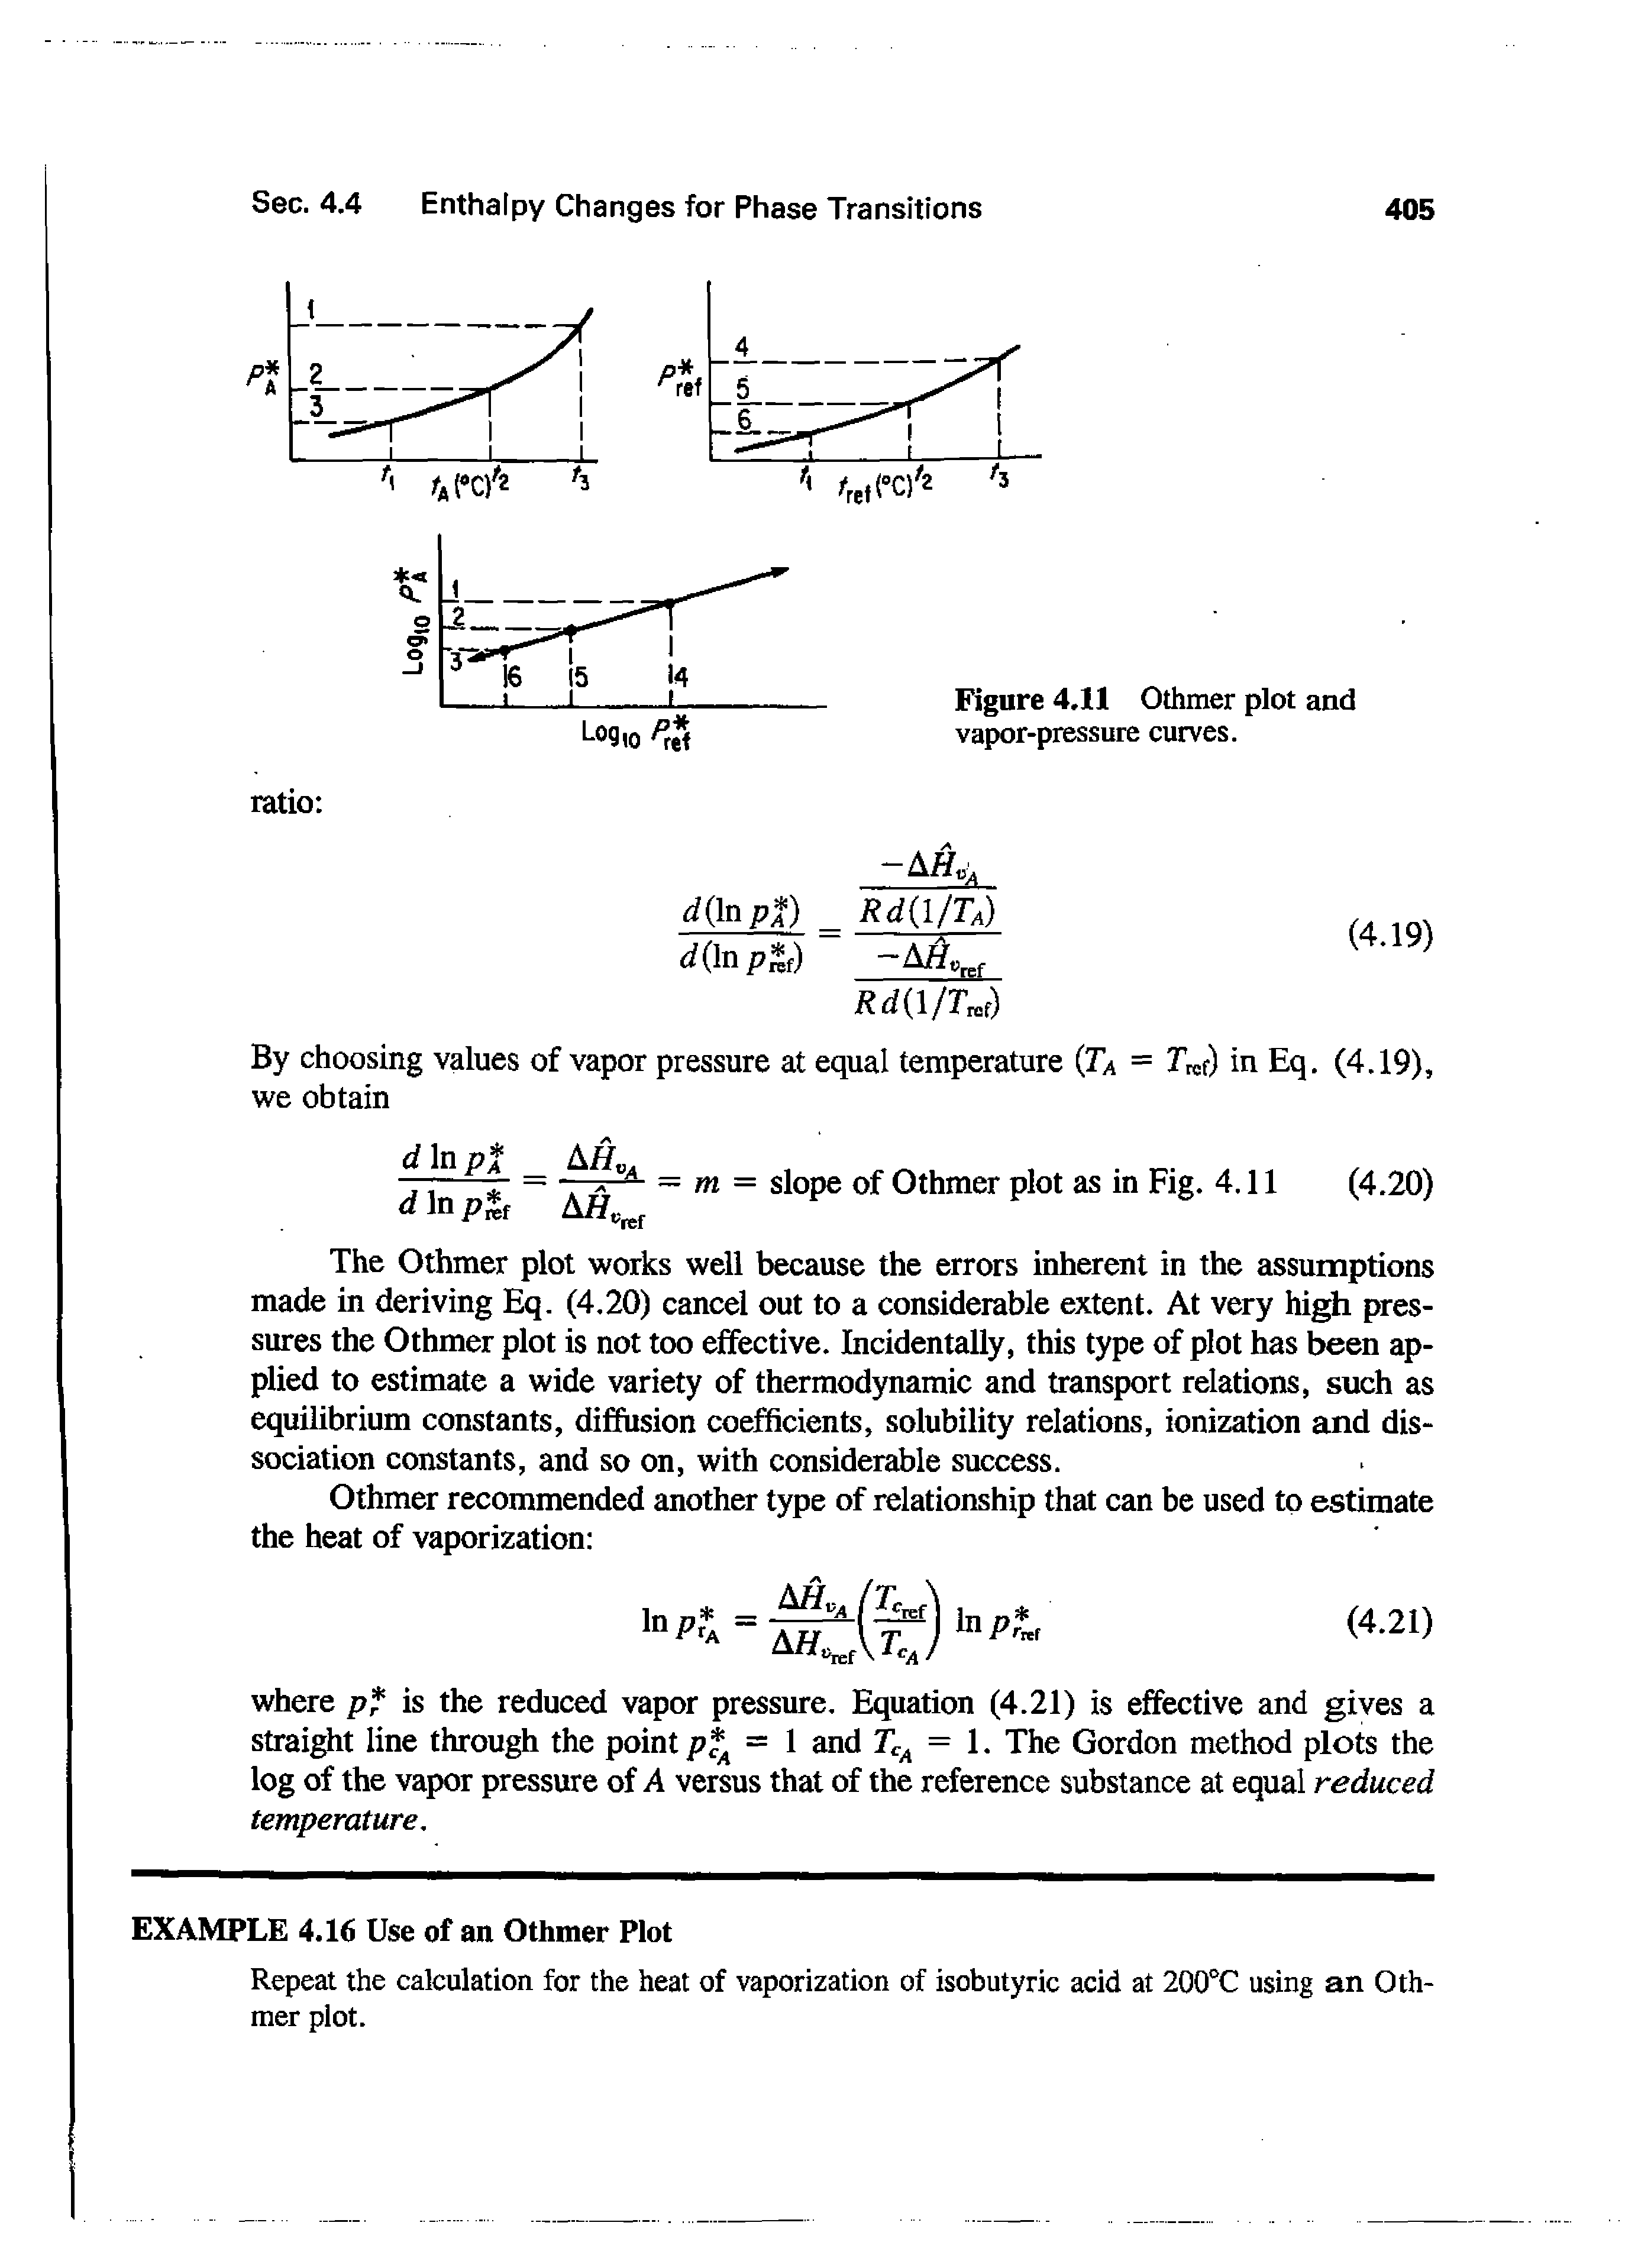 Figure 4,11 Othmer plot and vapor-pressure curves.